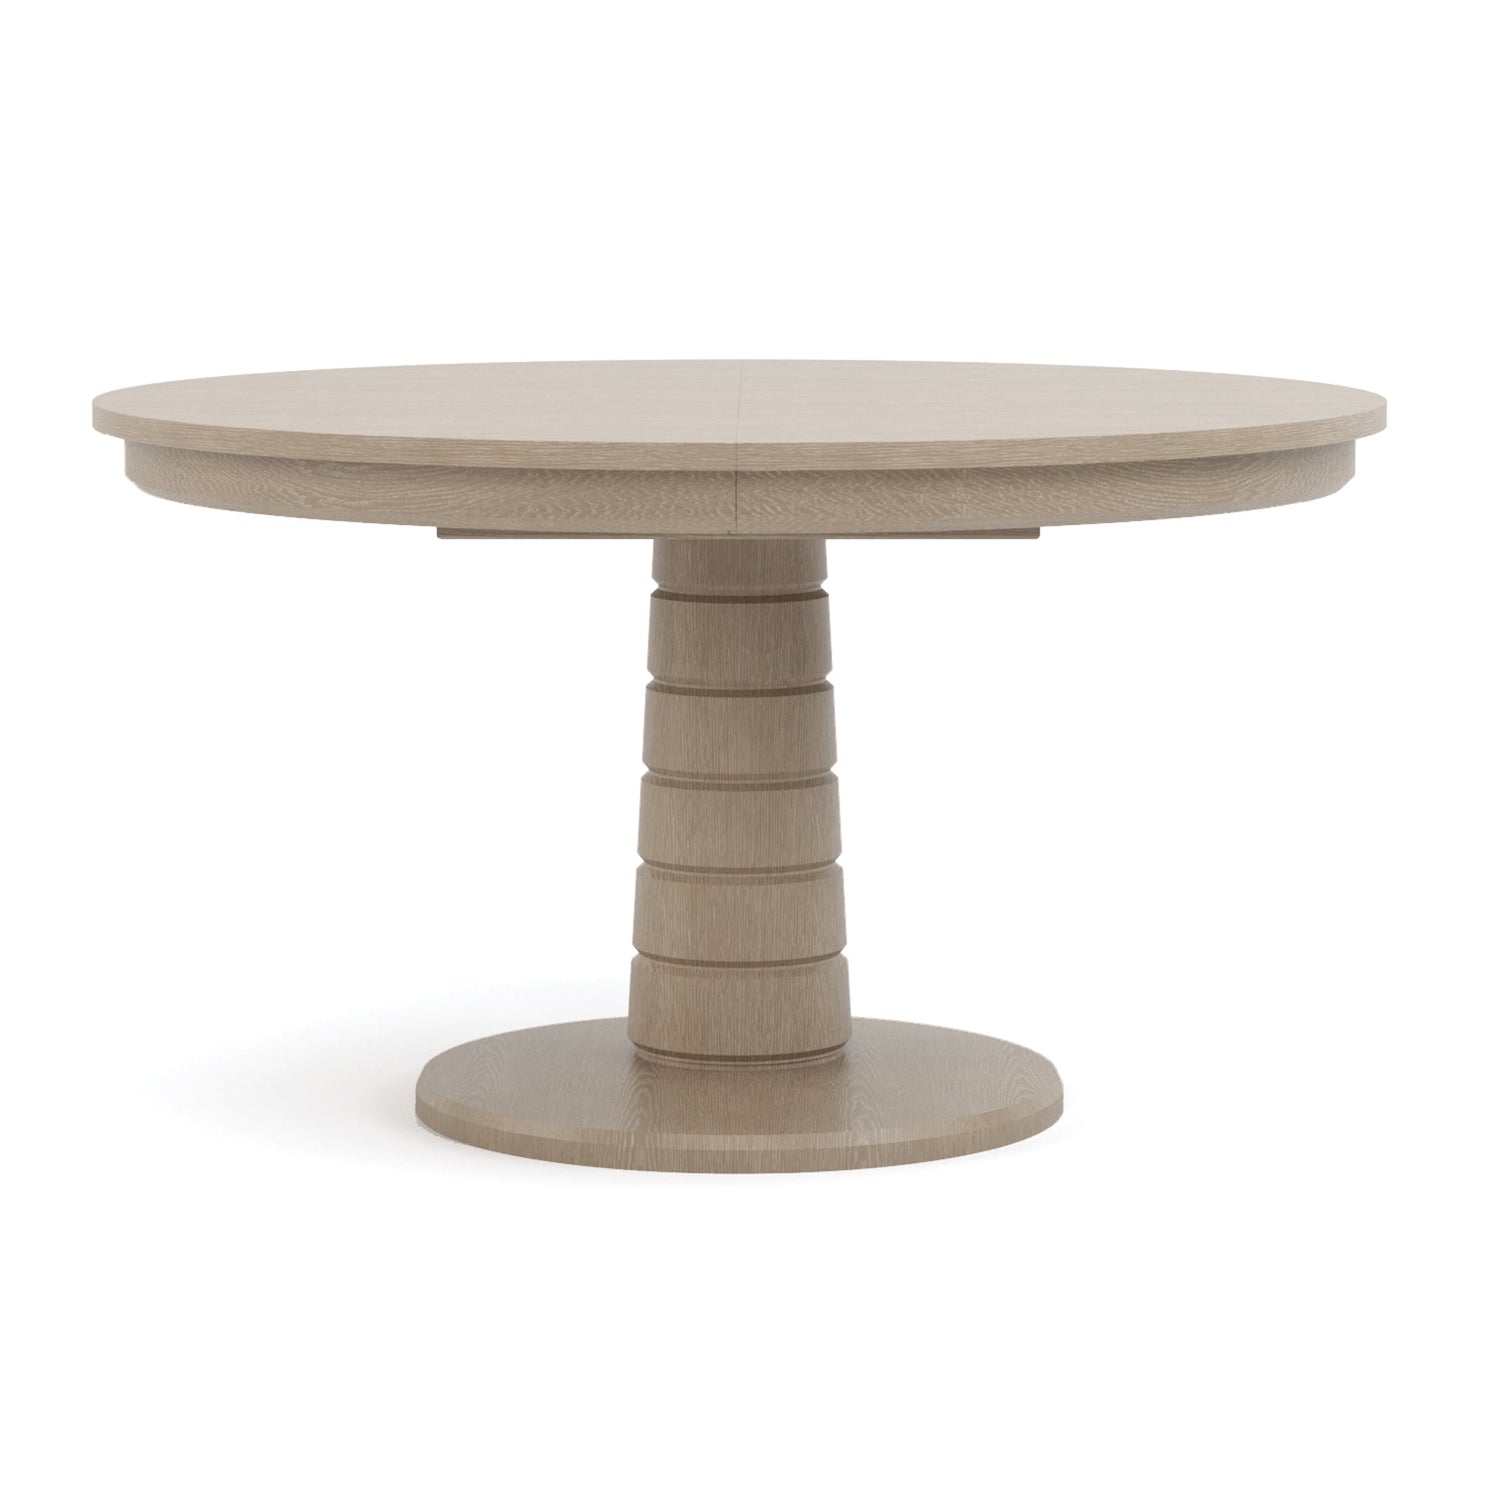 Maidstone Round Pedestal Table in 201 Sandbank finish